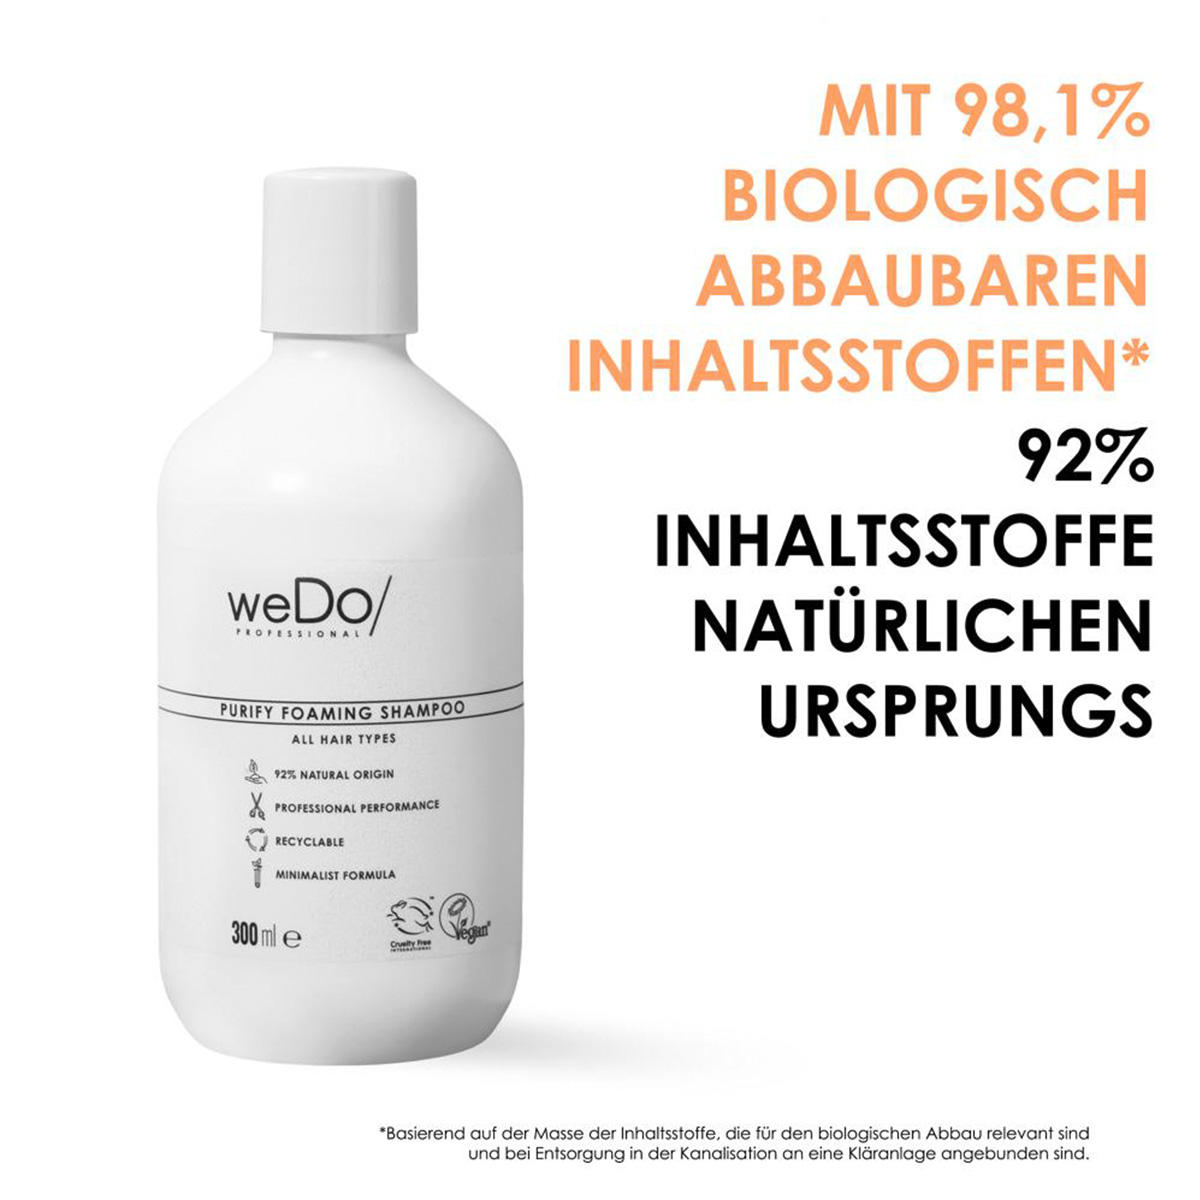 weDo/ Purify Foaming Shampoo 300 ml - 3